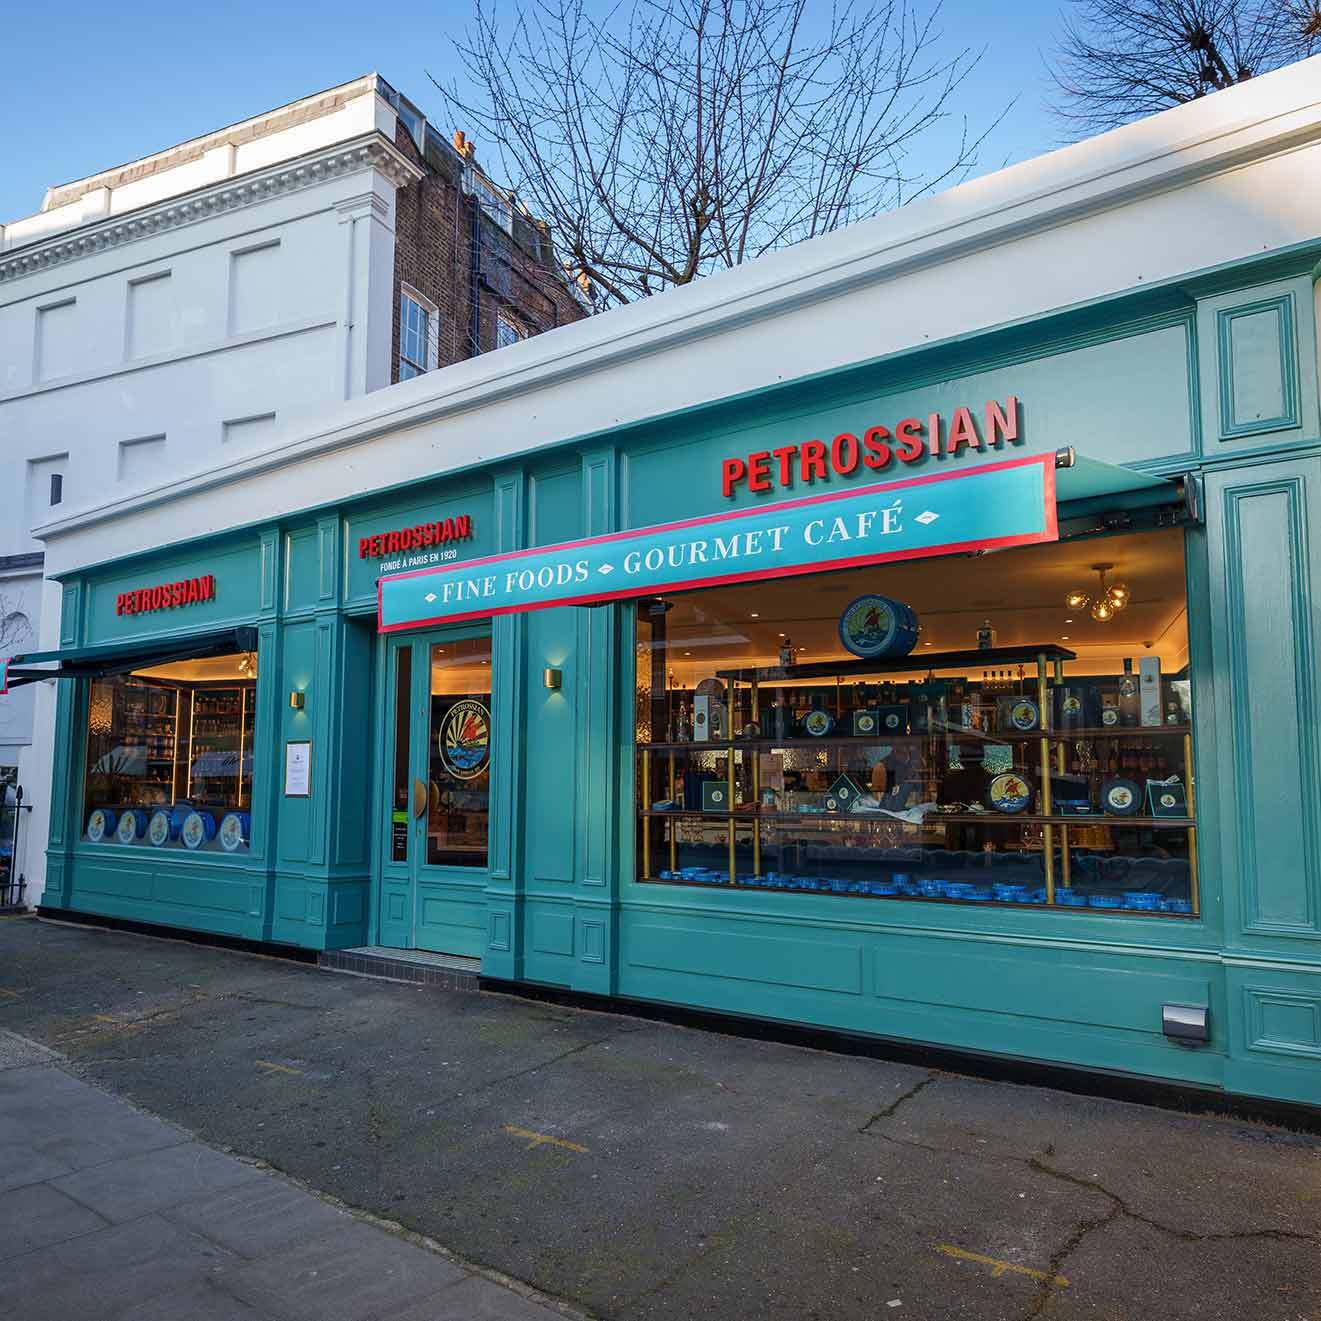 Petrossian Boutique London